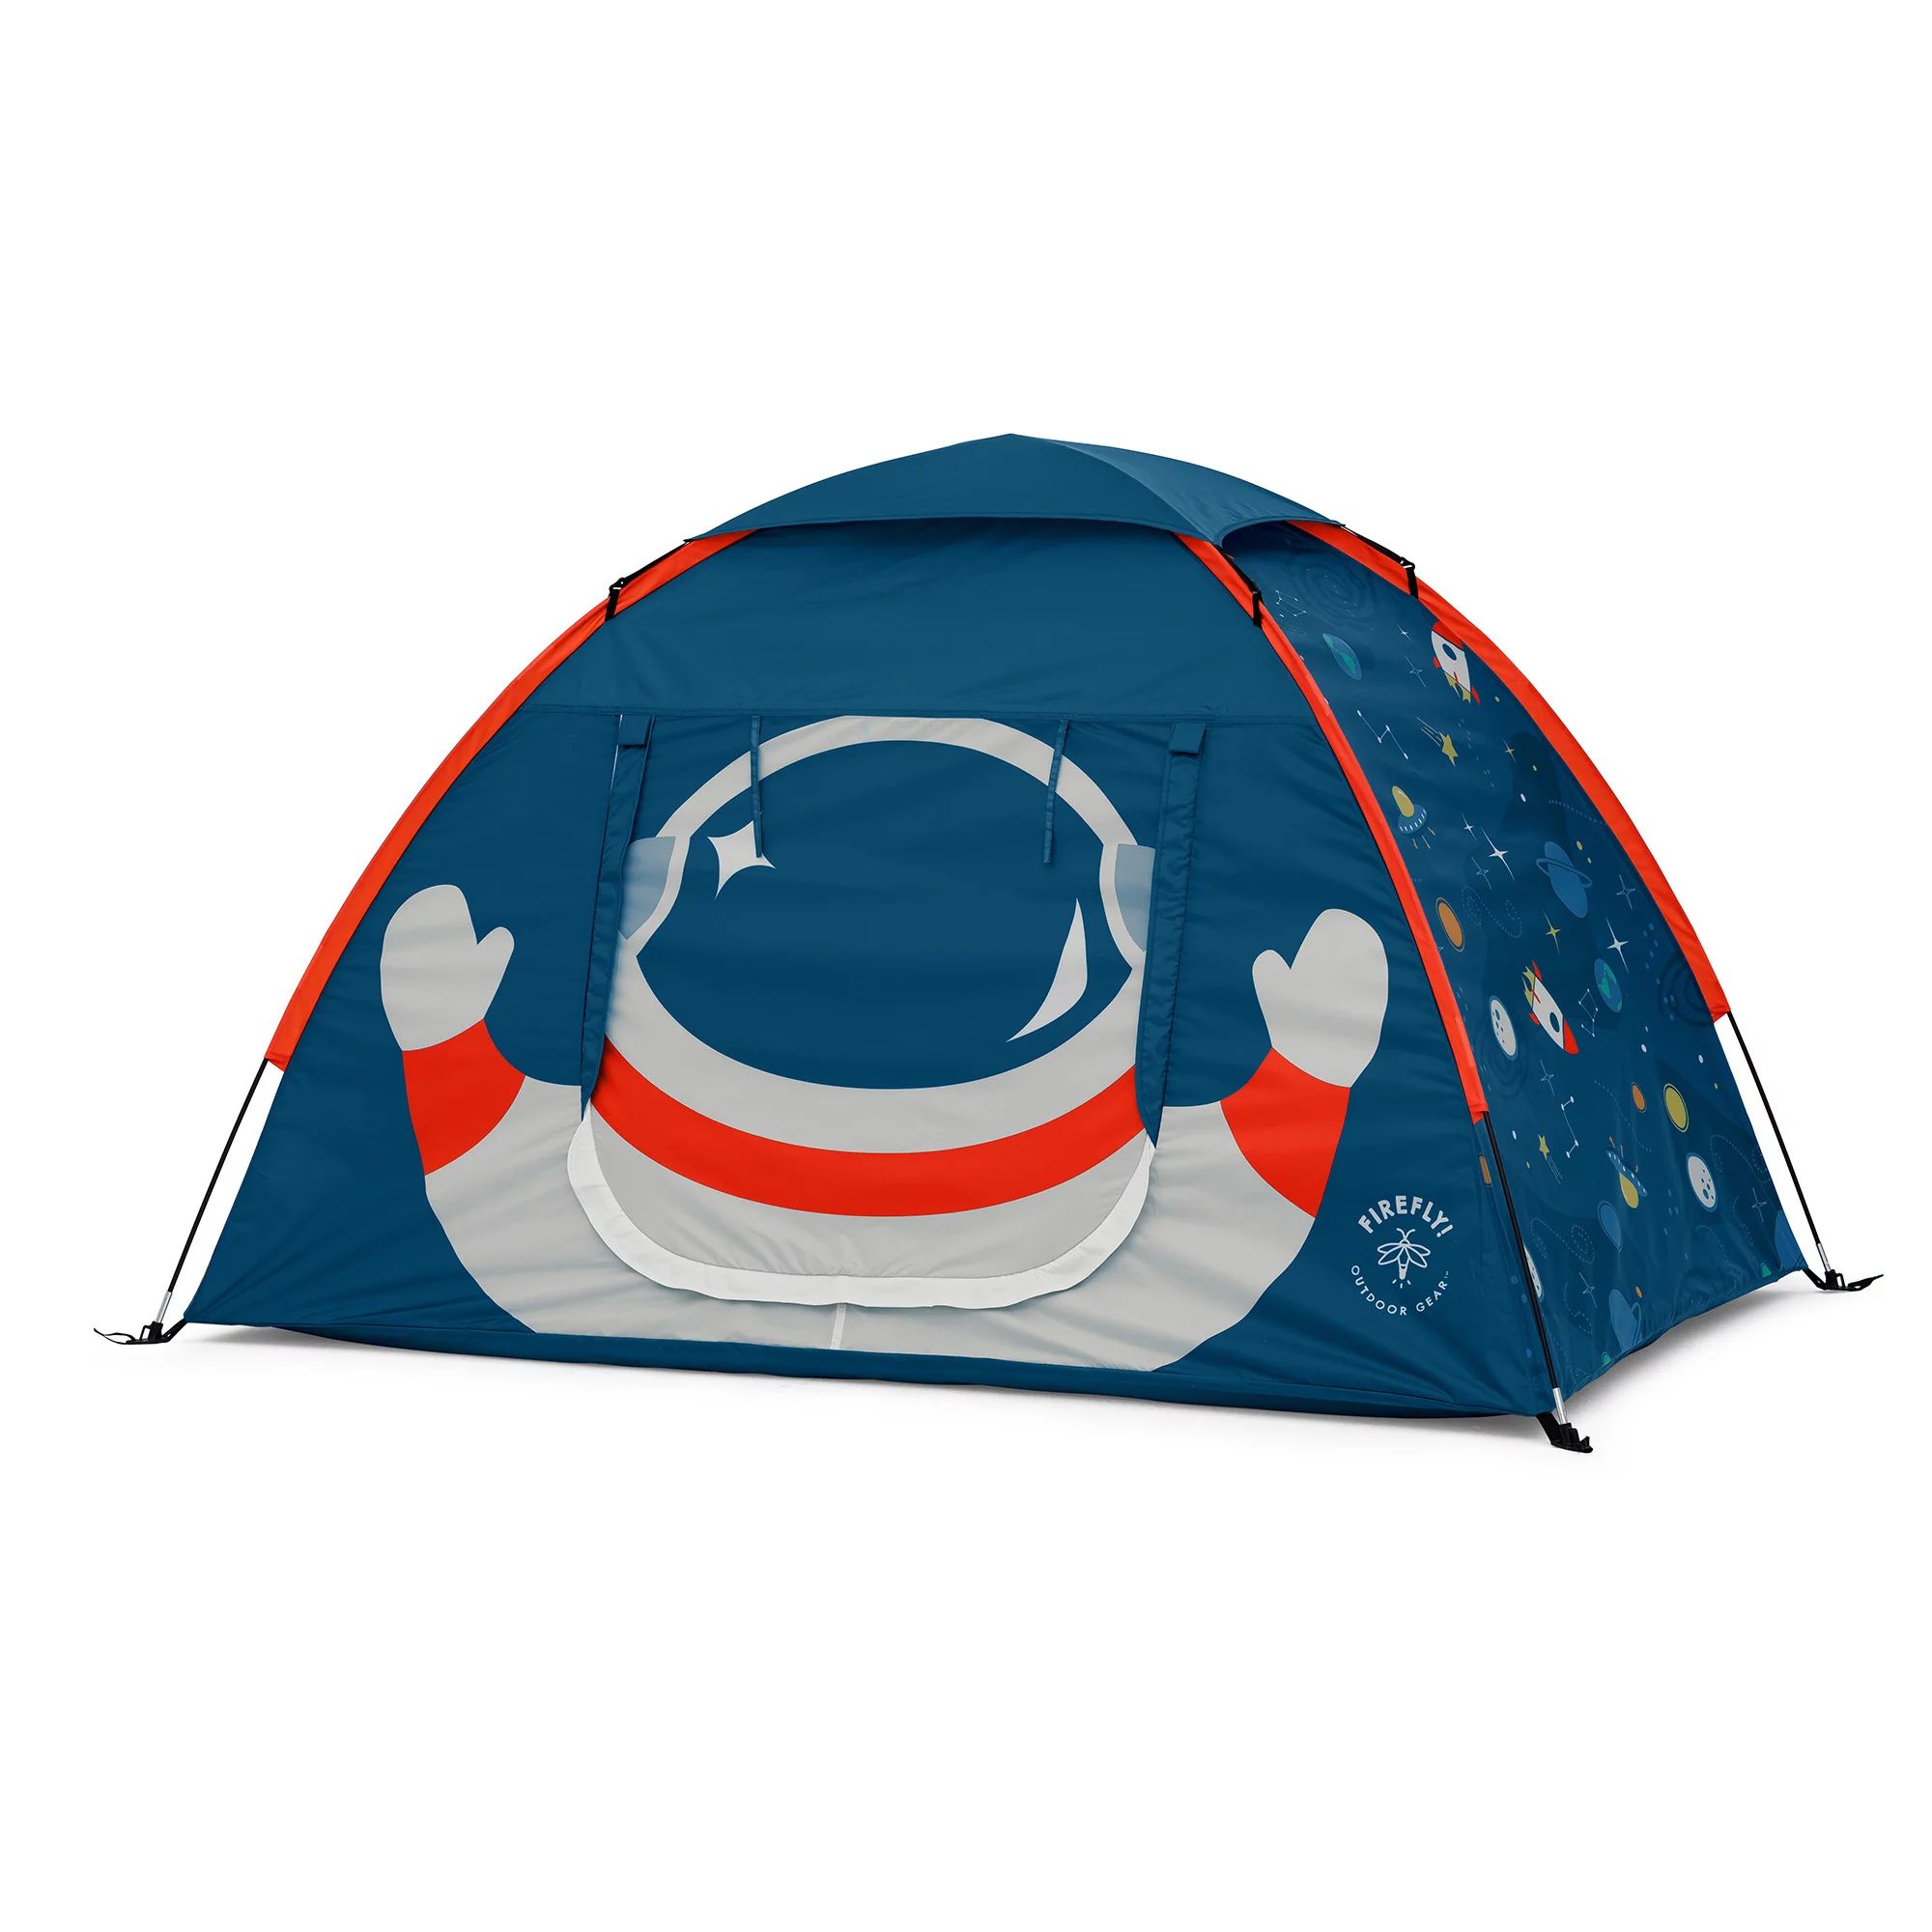 Firefly Outdoor Gear Astronaut Backpacking Tent | Walmart (US)